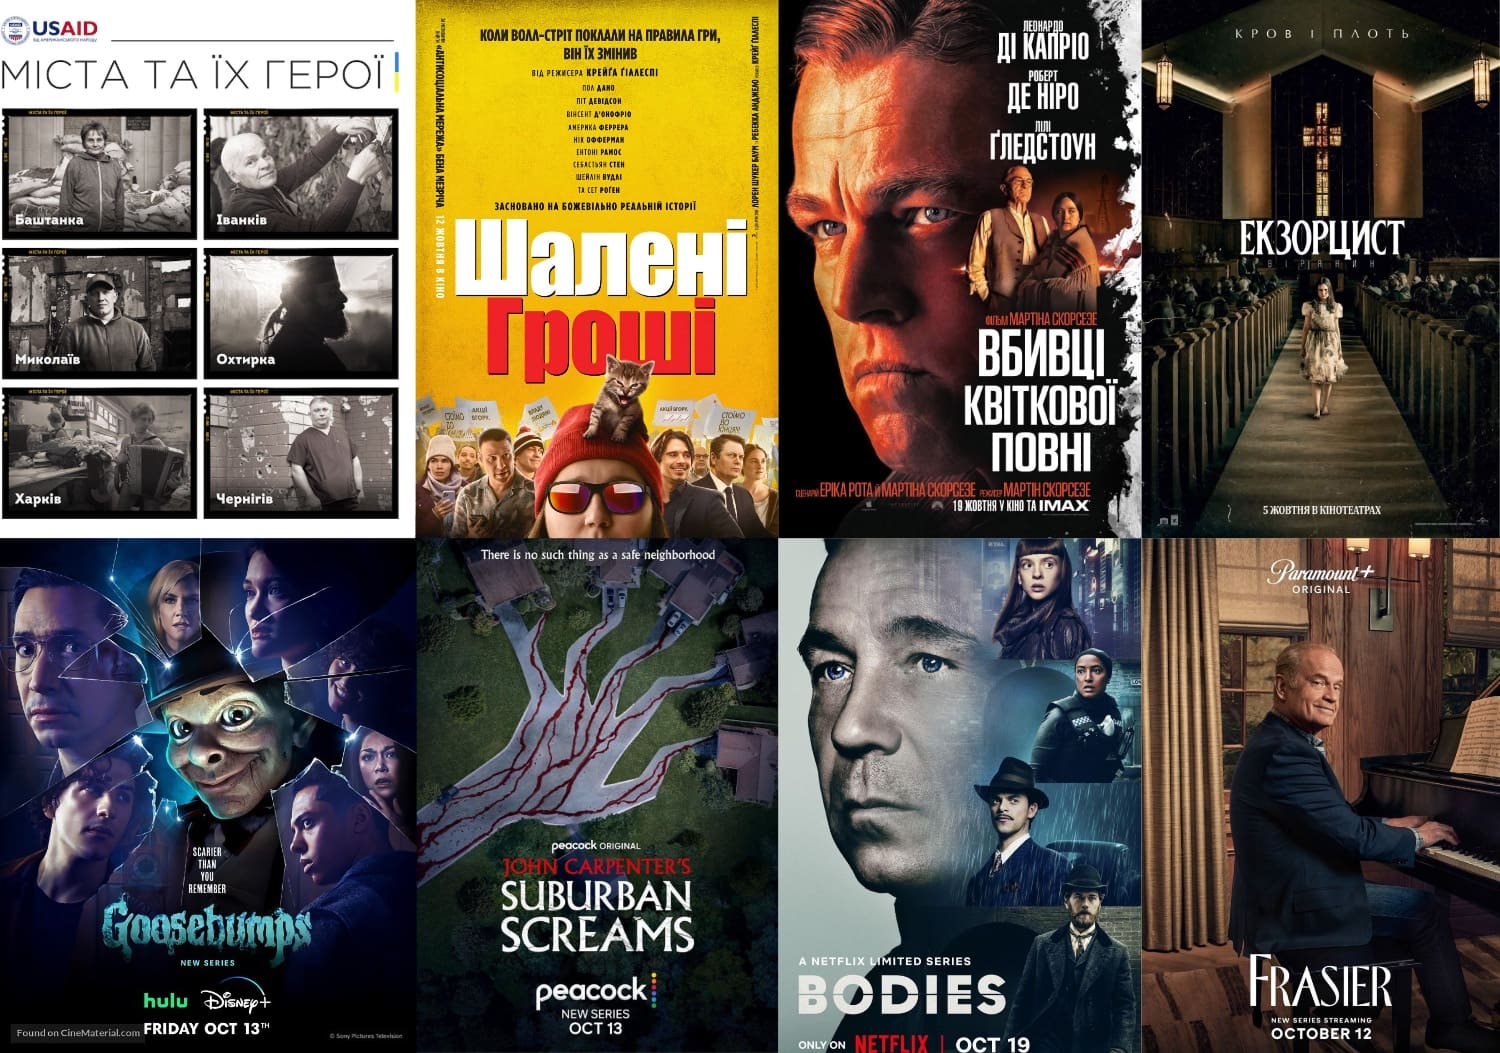 John Carpenter's Suburban Screams - Where to Watch and Stream - TV Guide